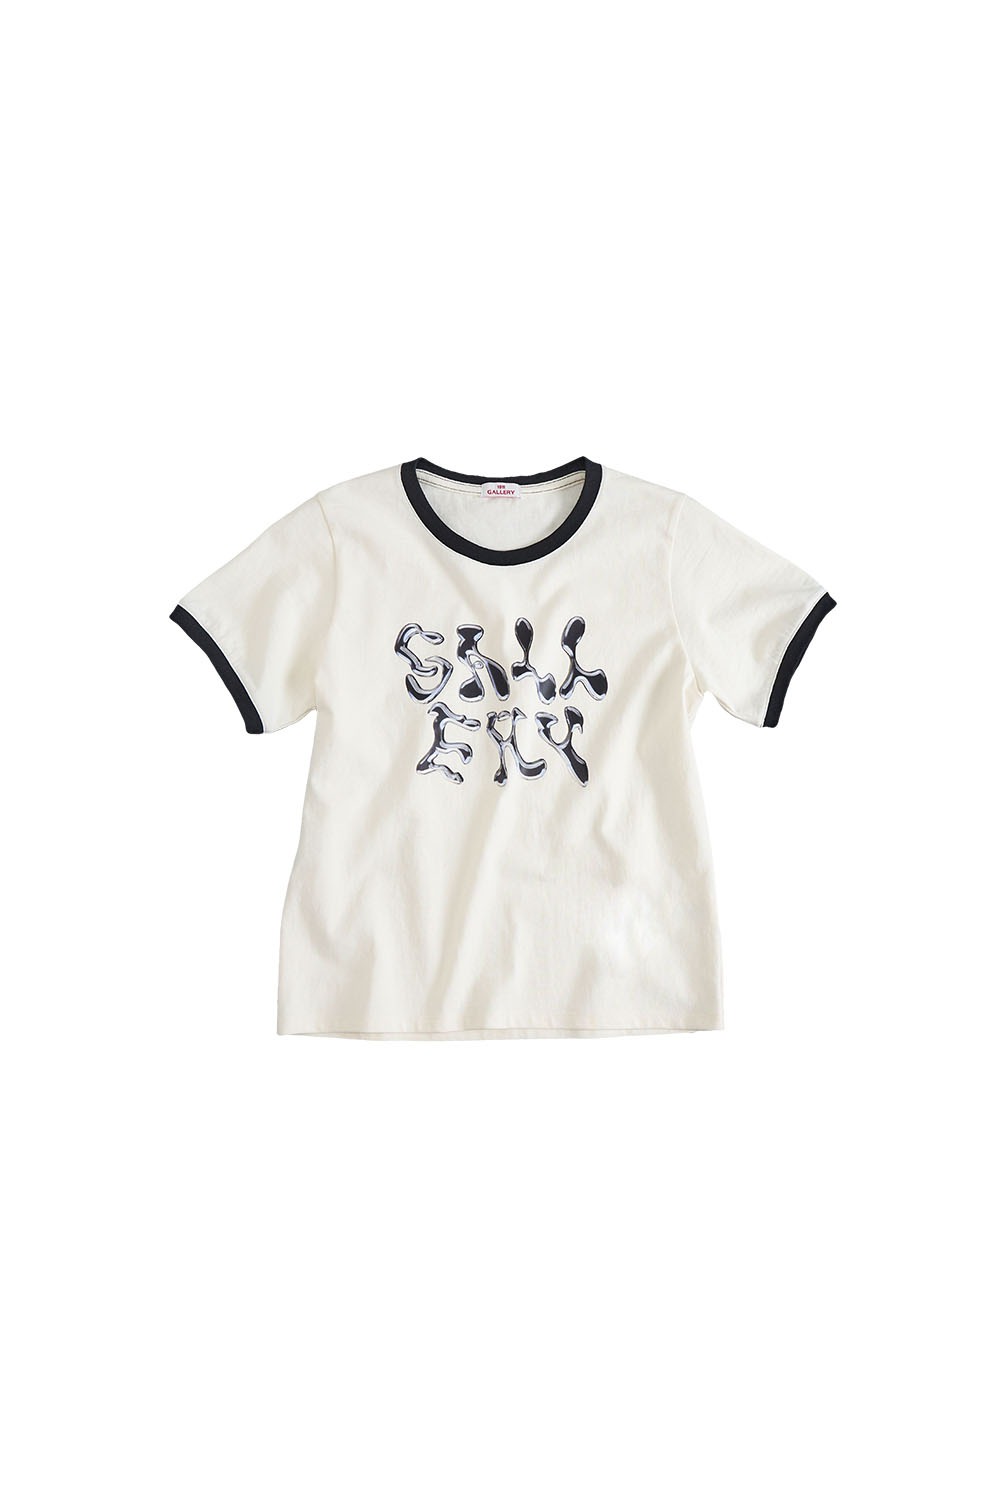 Gallery Baby Ringer T-shirt - Ivory / Black